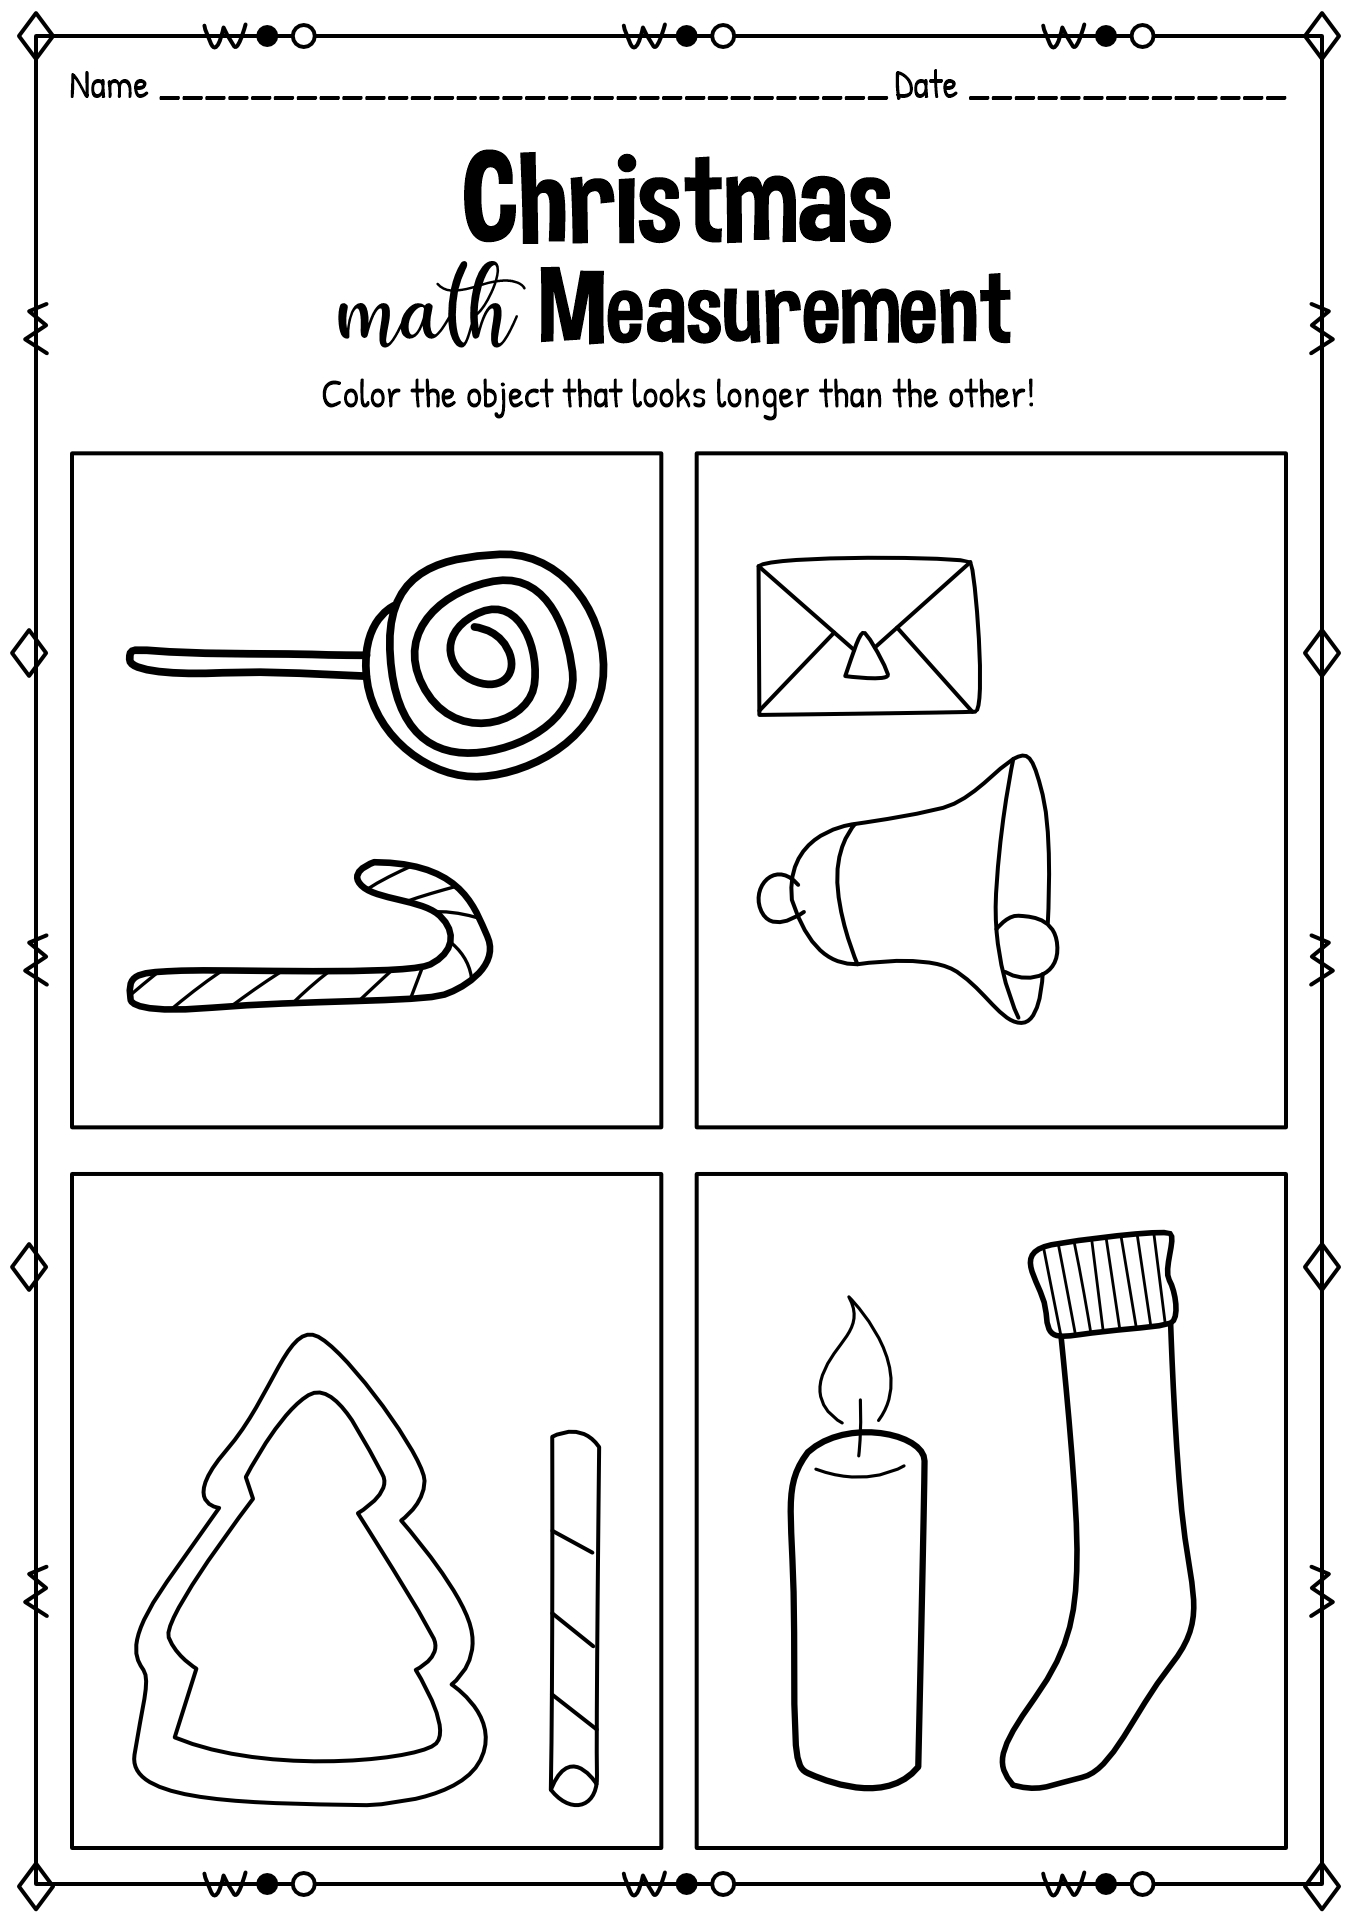 Christmas Measurement Worksheets Image